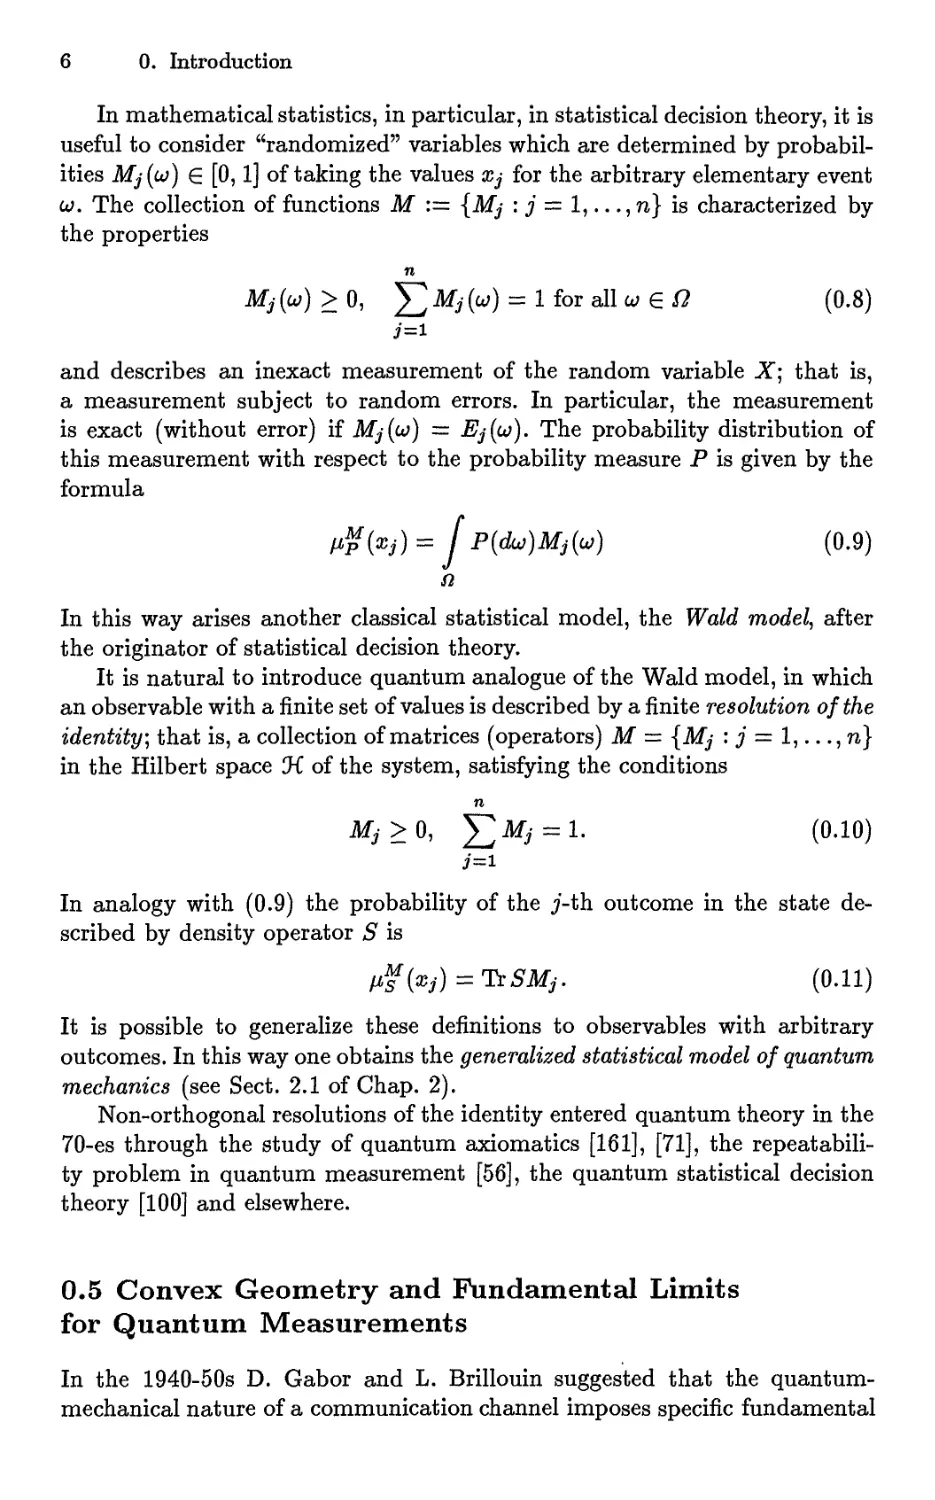 0.5 Convex Geometry and Fundamental Limits for Quantum Measurements